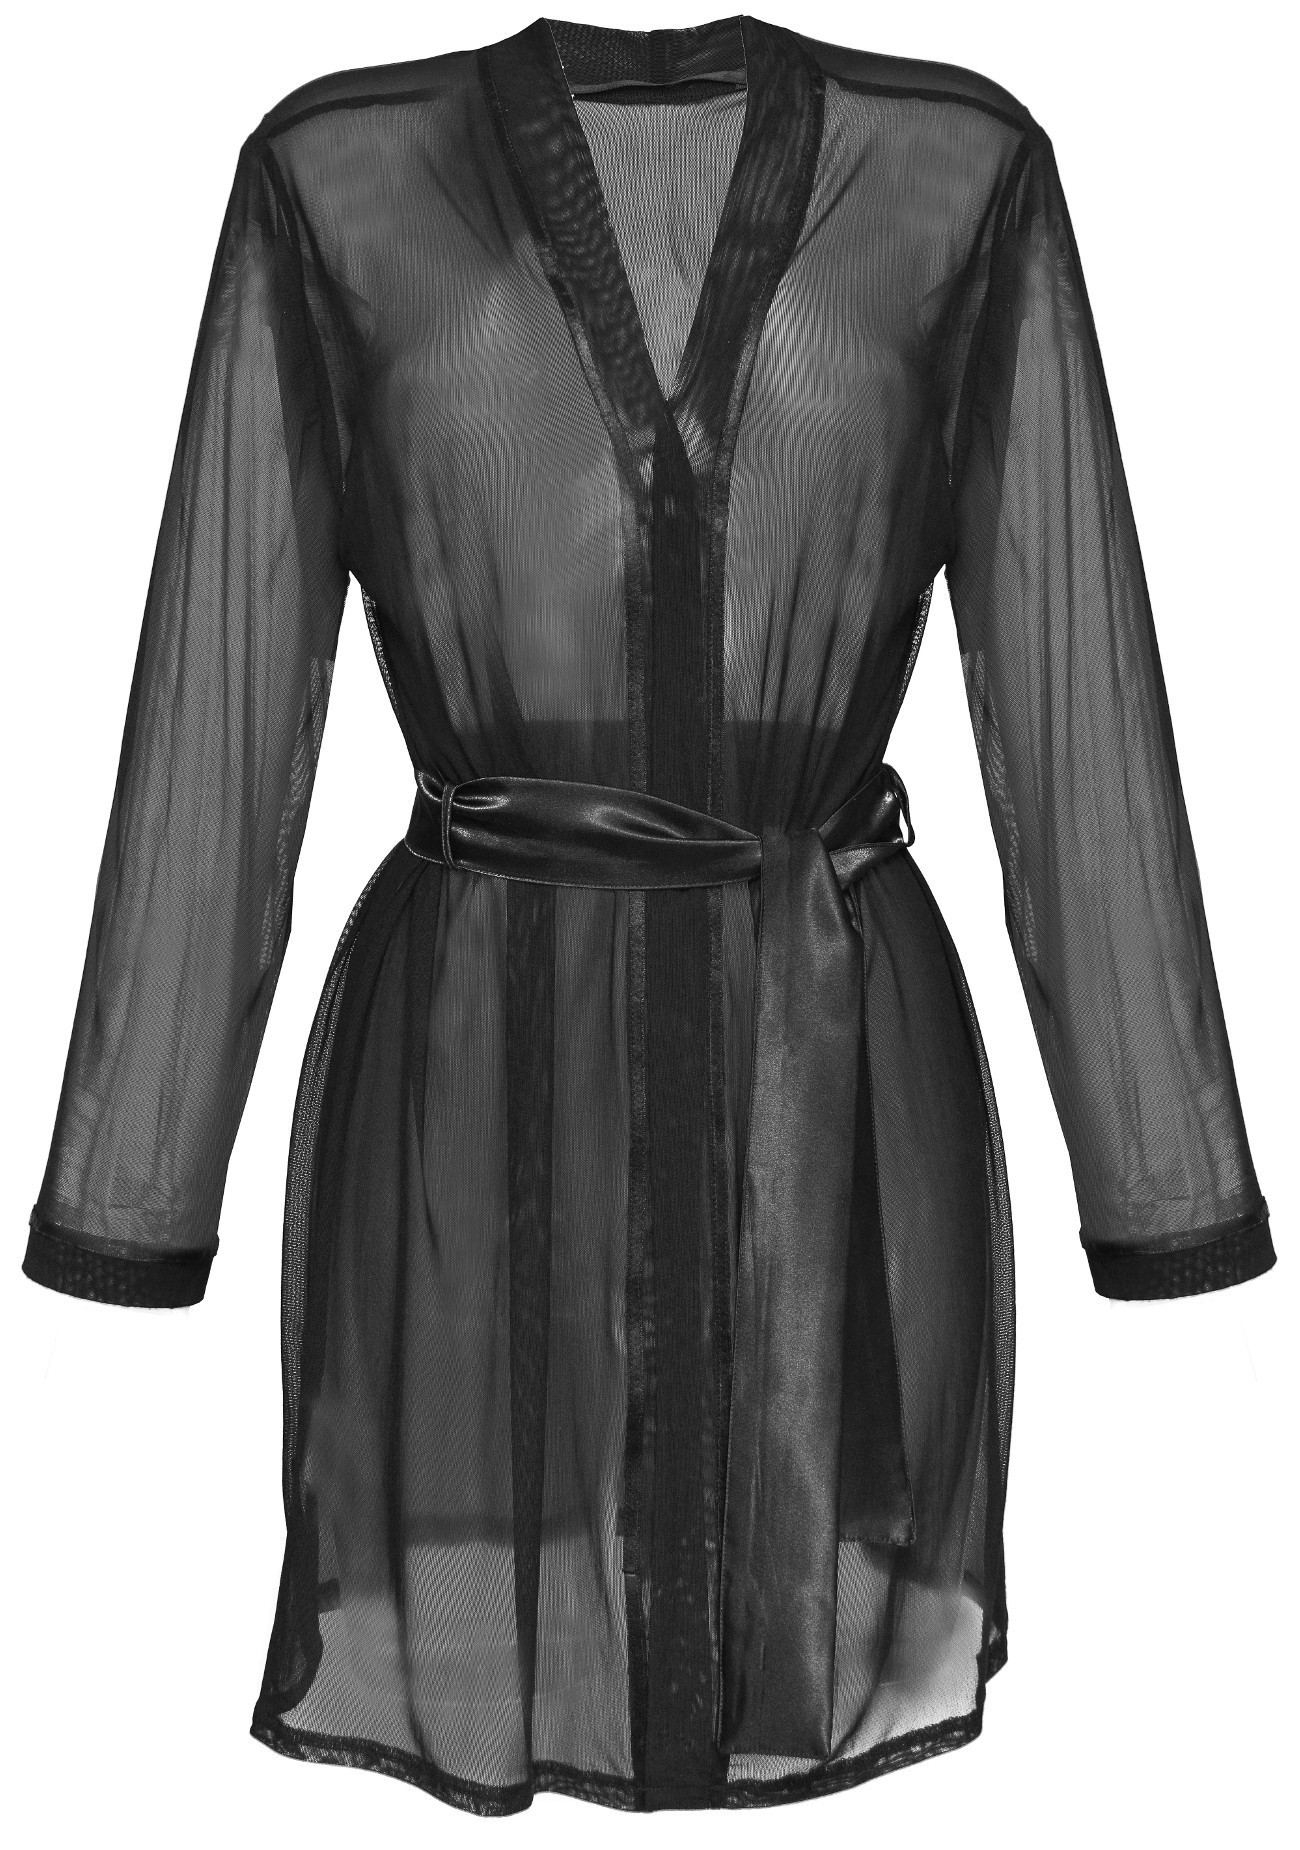 Housecoat model 18226921 Black XL Black - DKaren